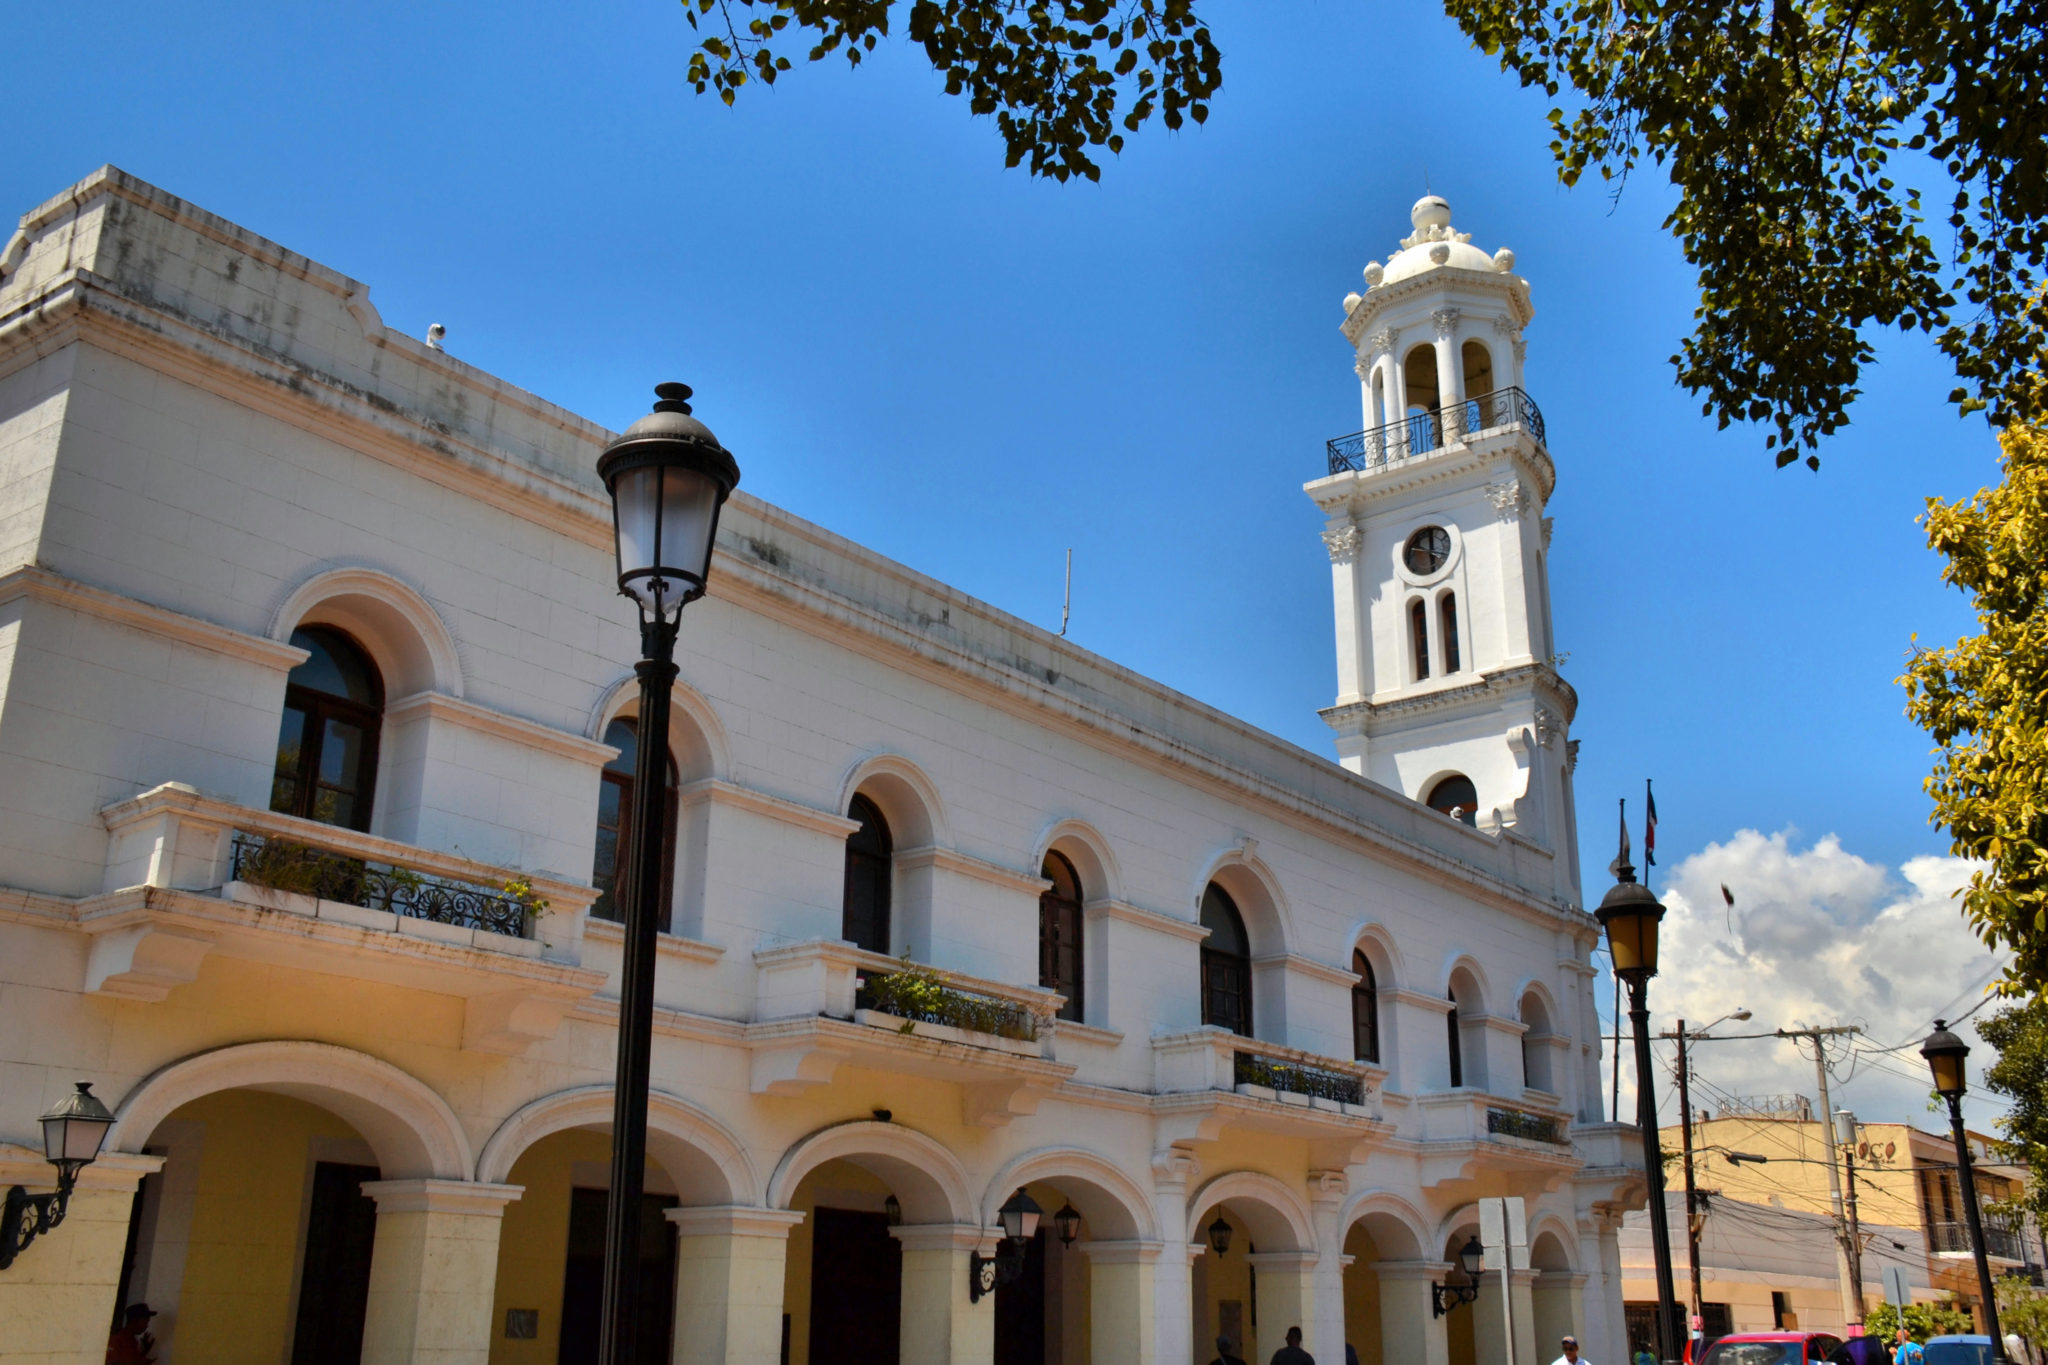 City hall in Santo Domingo